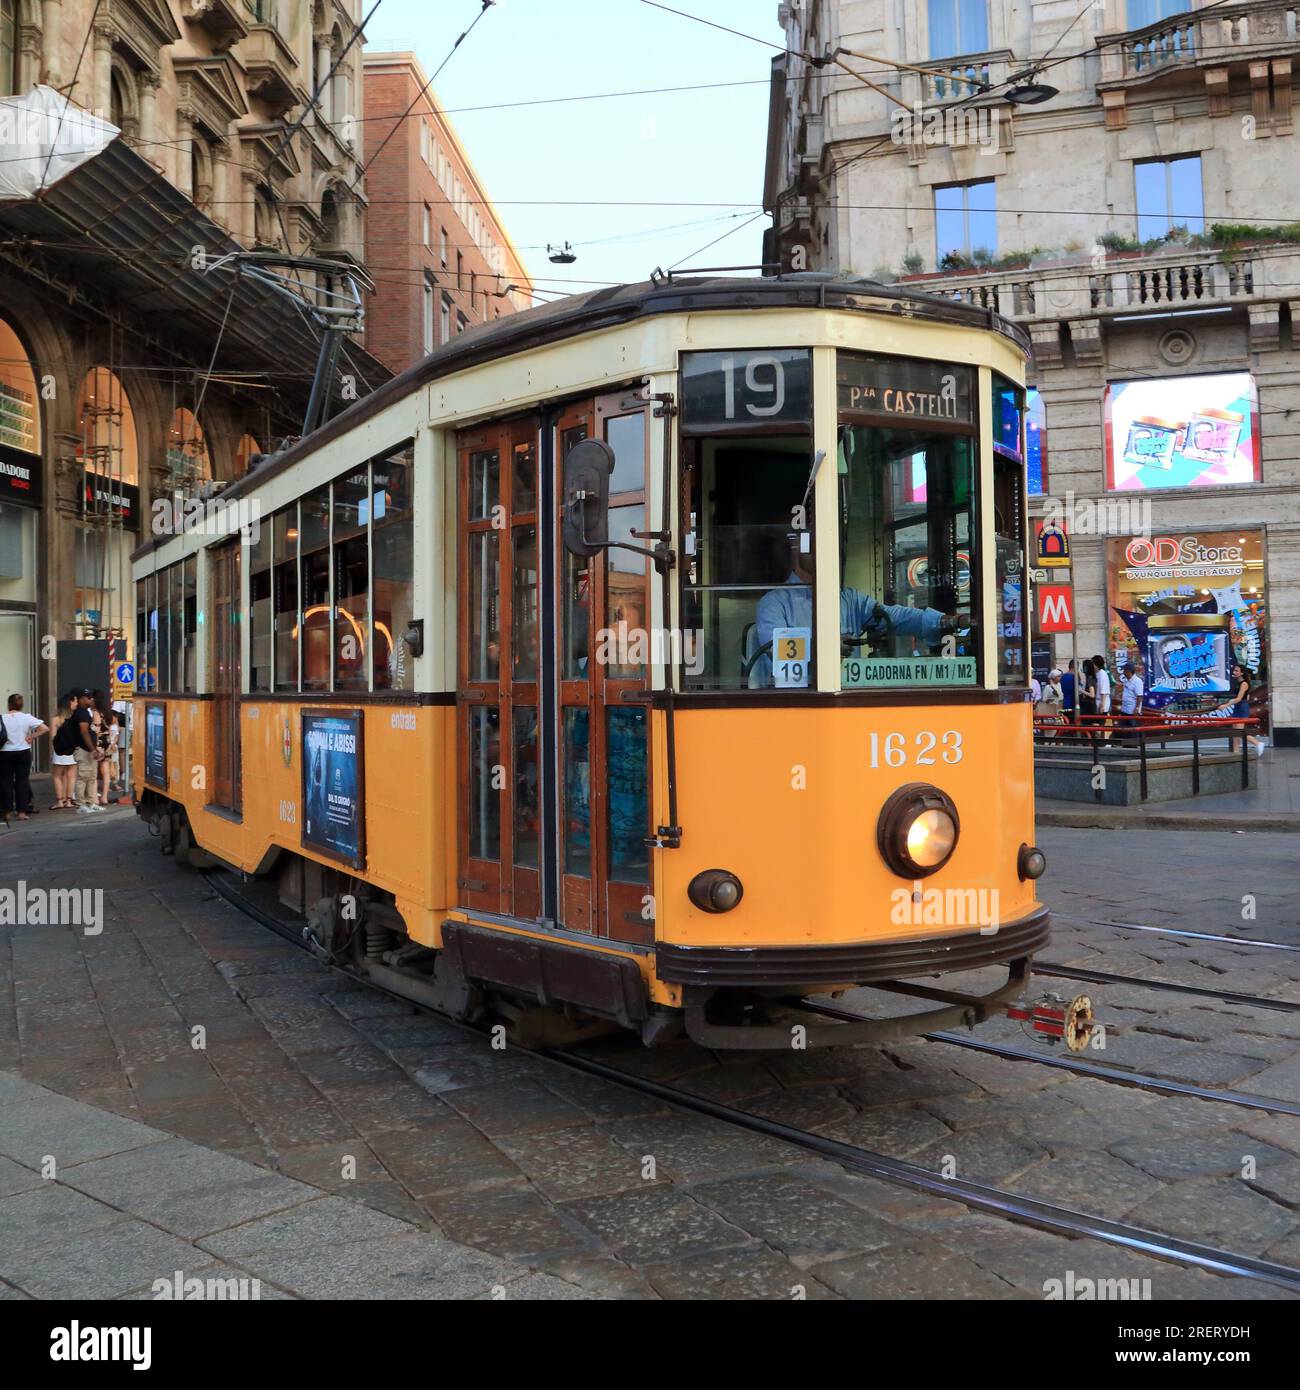 Historic tram in Milan, Italy. Milano, Mailand.Tram line 19 Stock Photo